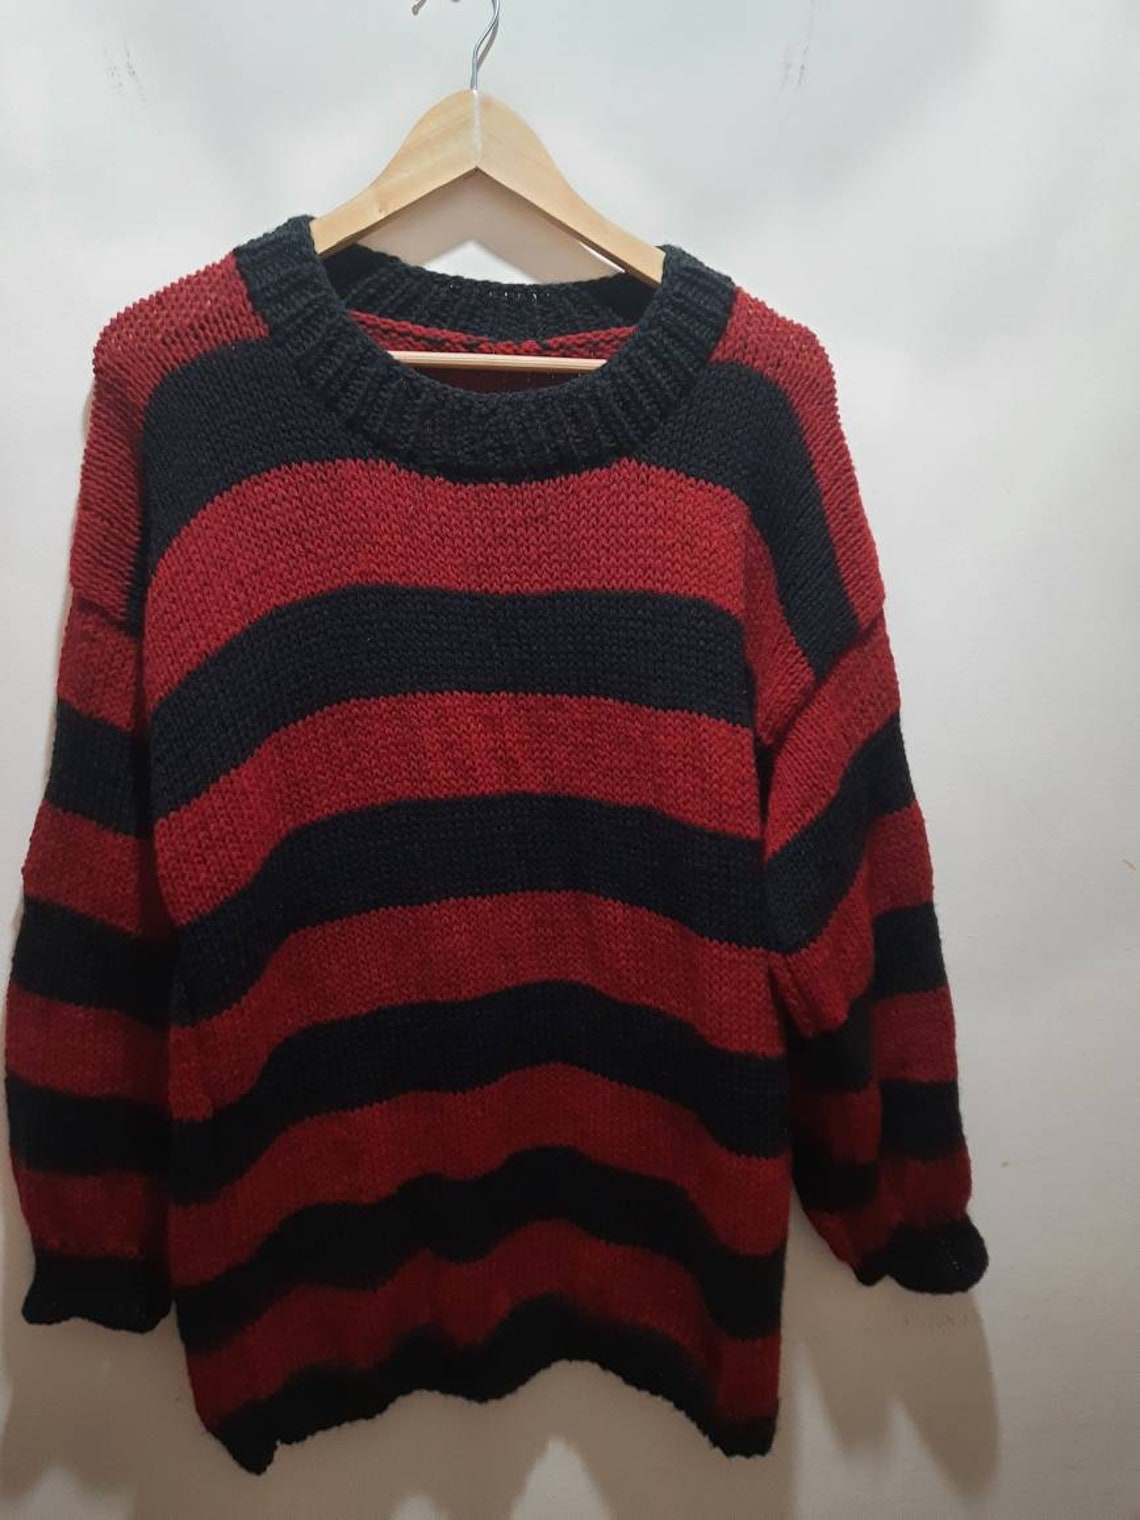 Kurt Cobain Sweater Red and Black Striped Jumper Nirvana - Etsy